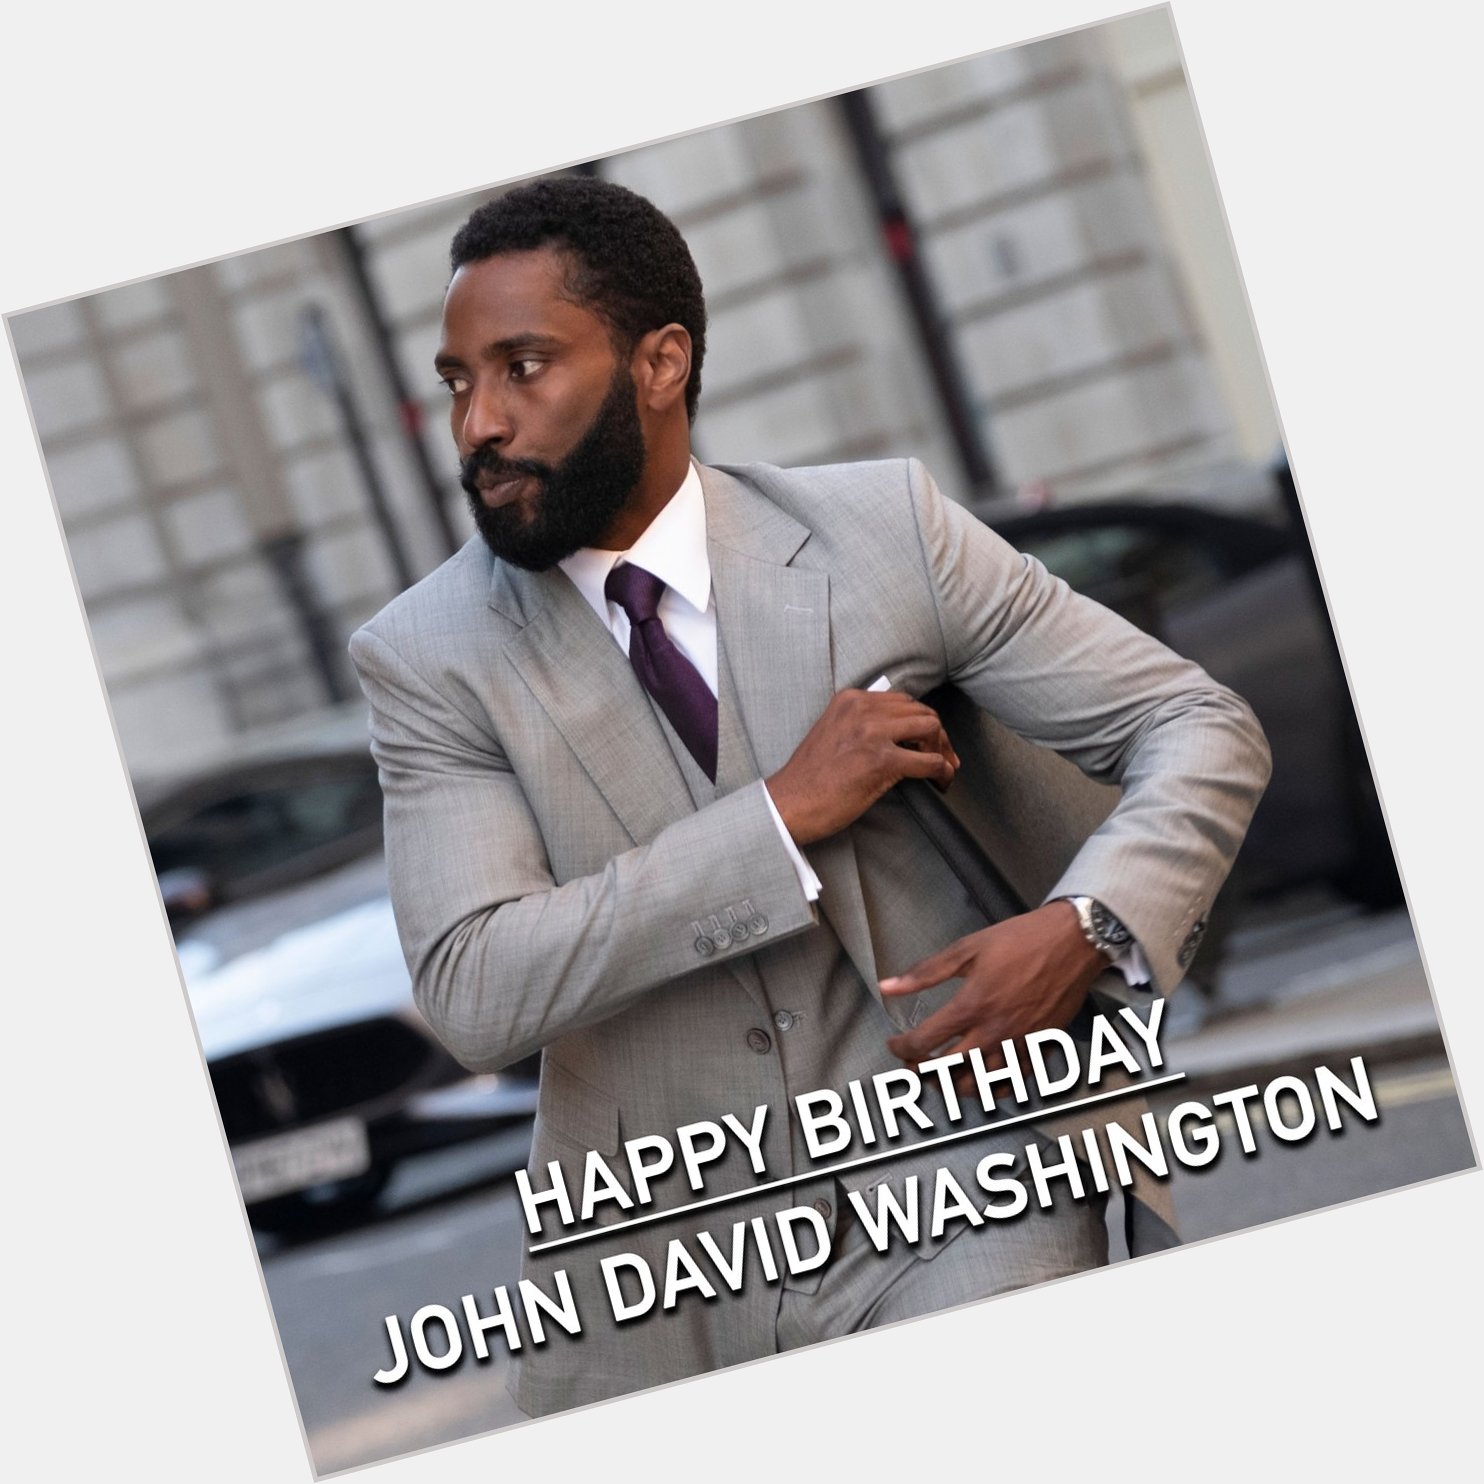 Happy Birthday to John David Washington who plays the Protagonist in Christopher Nolan s upcoming 